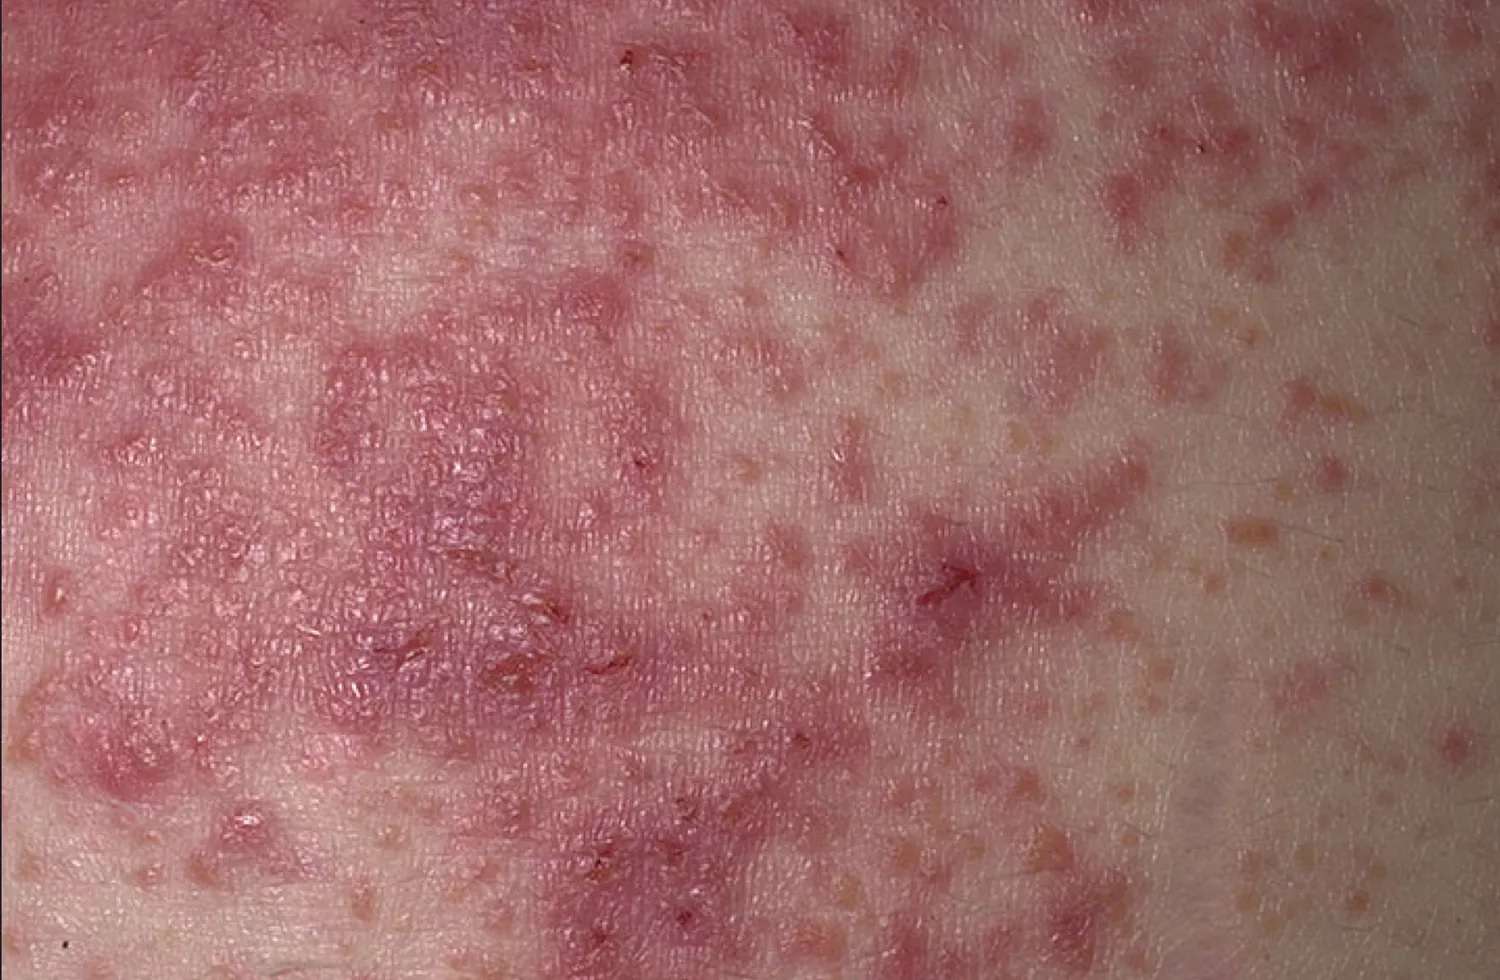 coeliac disease rash photos